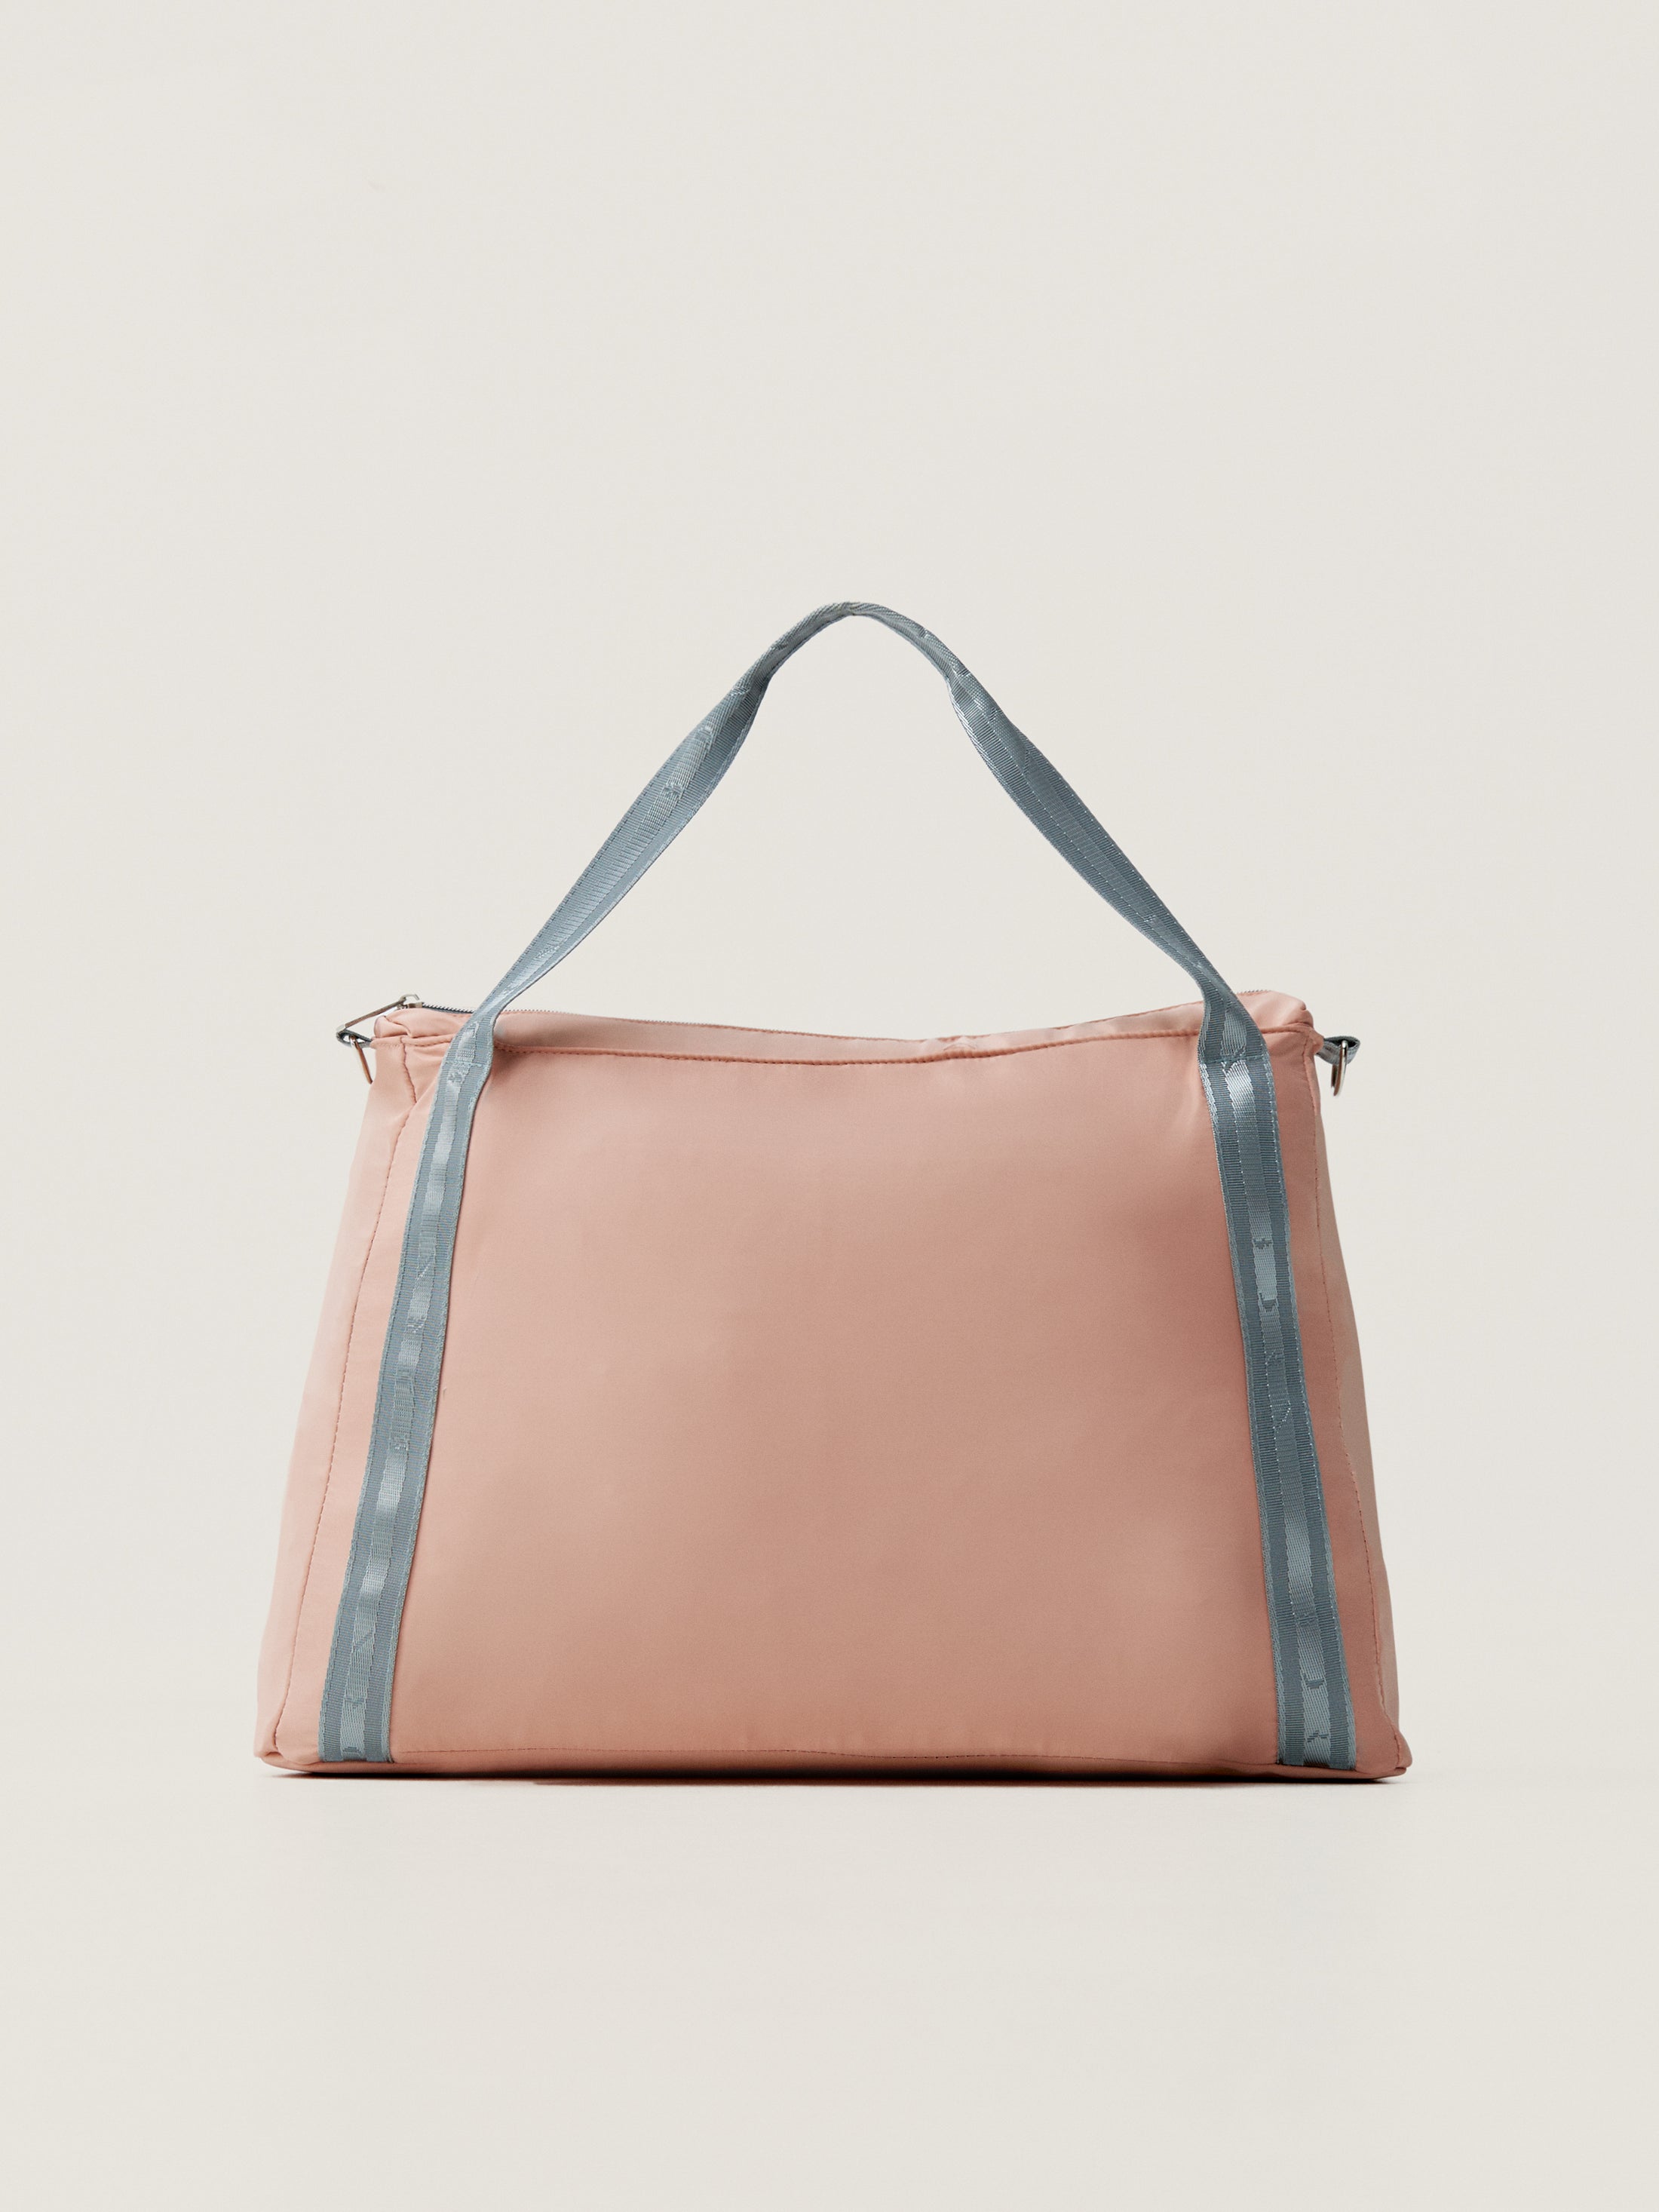 Bag Cross Pink Soft